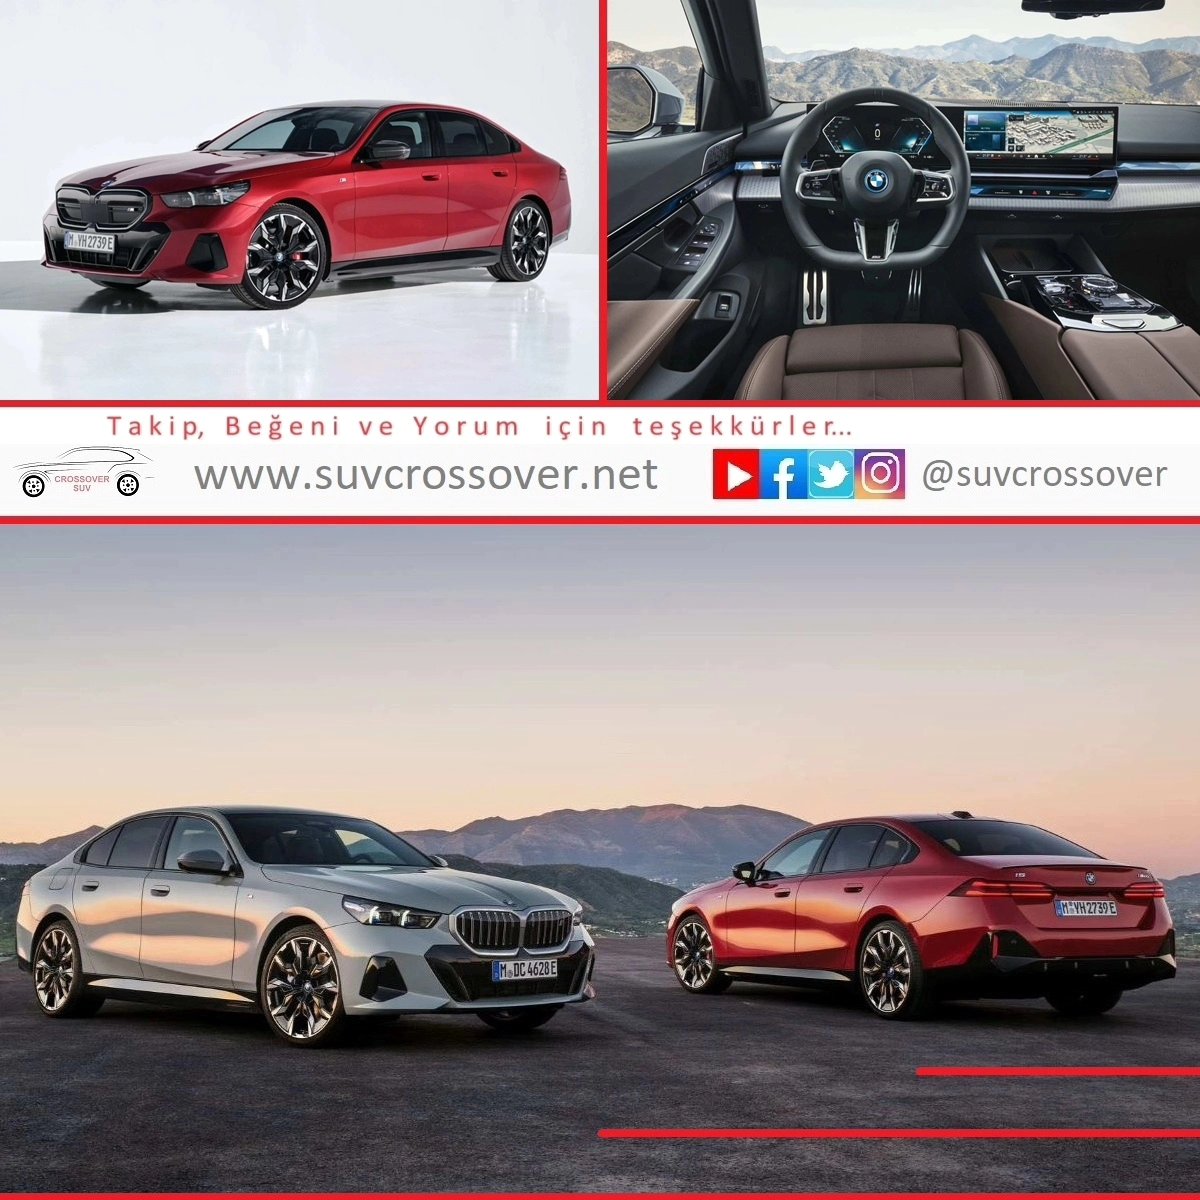 BMW 5 Serisi WWCOTY oylarıyla Yılın En İyi Büyük Otomobili oldu.

￼suvcrossover.net
#SUV, #crossover, #SUVcrossover, #cars, #carinstagram, #instacar, #carsofinstagram, #osmanyavuz, #osmandannameler, #caroffamily, #carpics, #carpictures, #dreamcar, #electricvehicle,